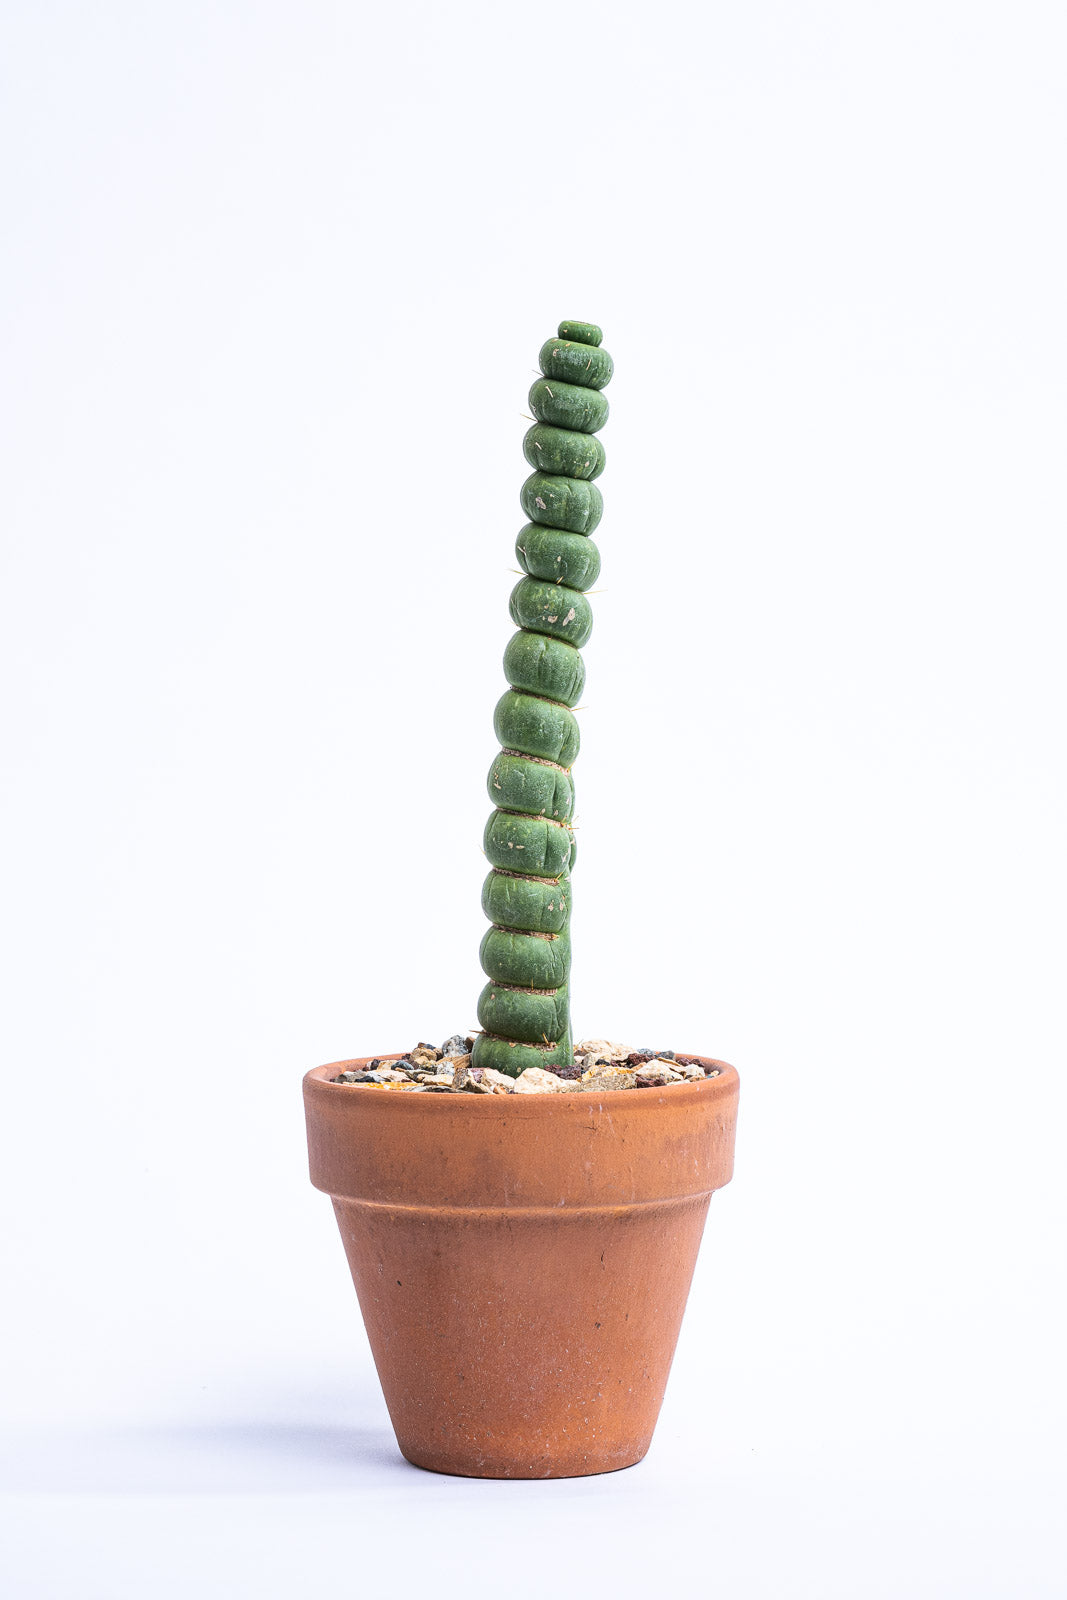 Rare Live Cactus  - Eulychnia Castanea Spiralis - Twisted Rare Succulent - Unicorn Horn Cactus